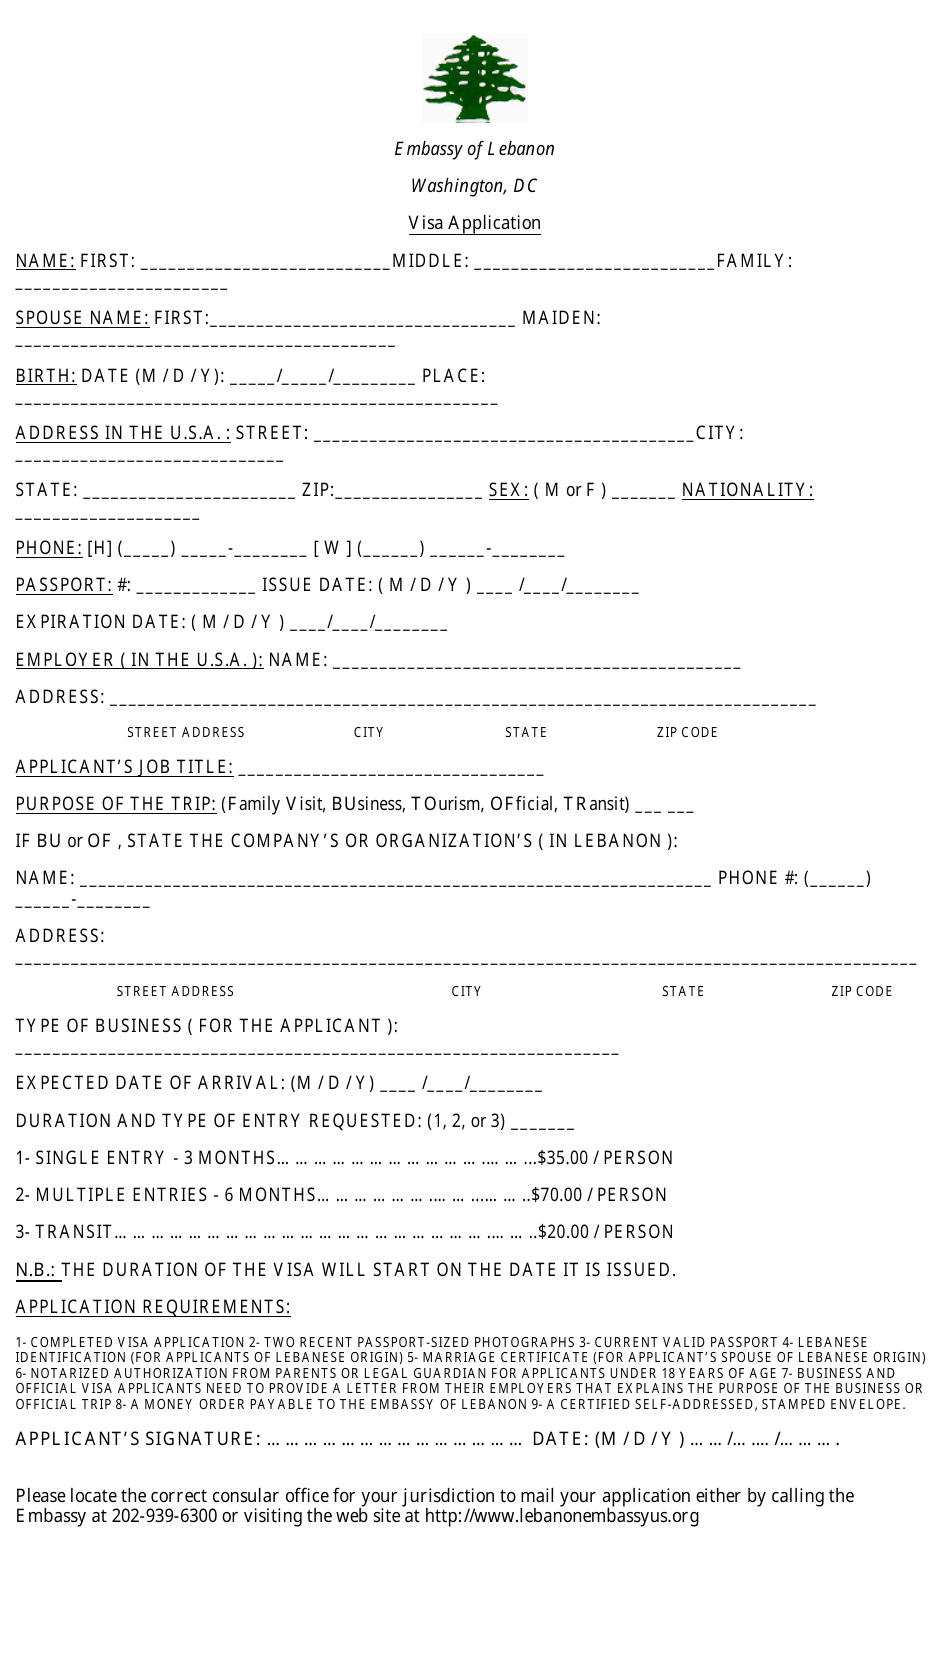 Lebanon Visa Application Form - Embassy of Lebanon - Washington, D.C., Page 1